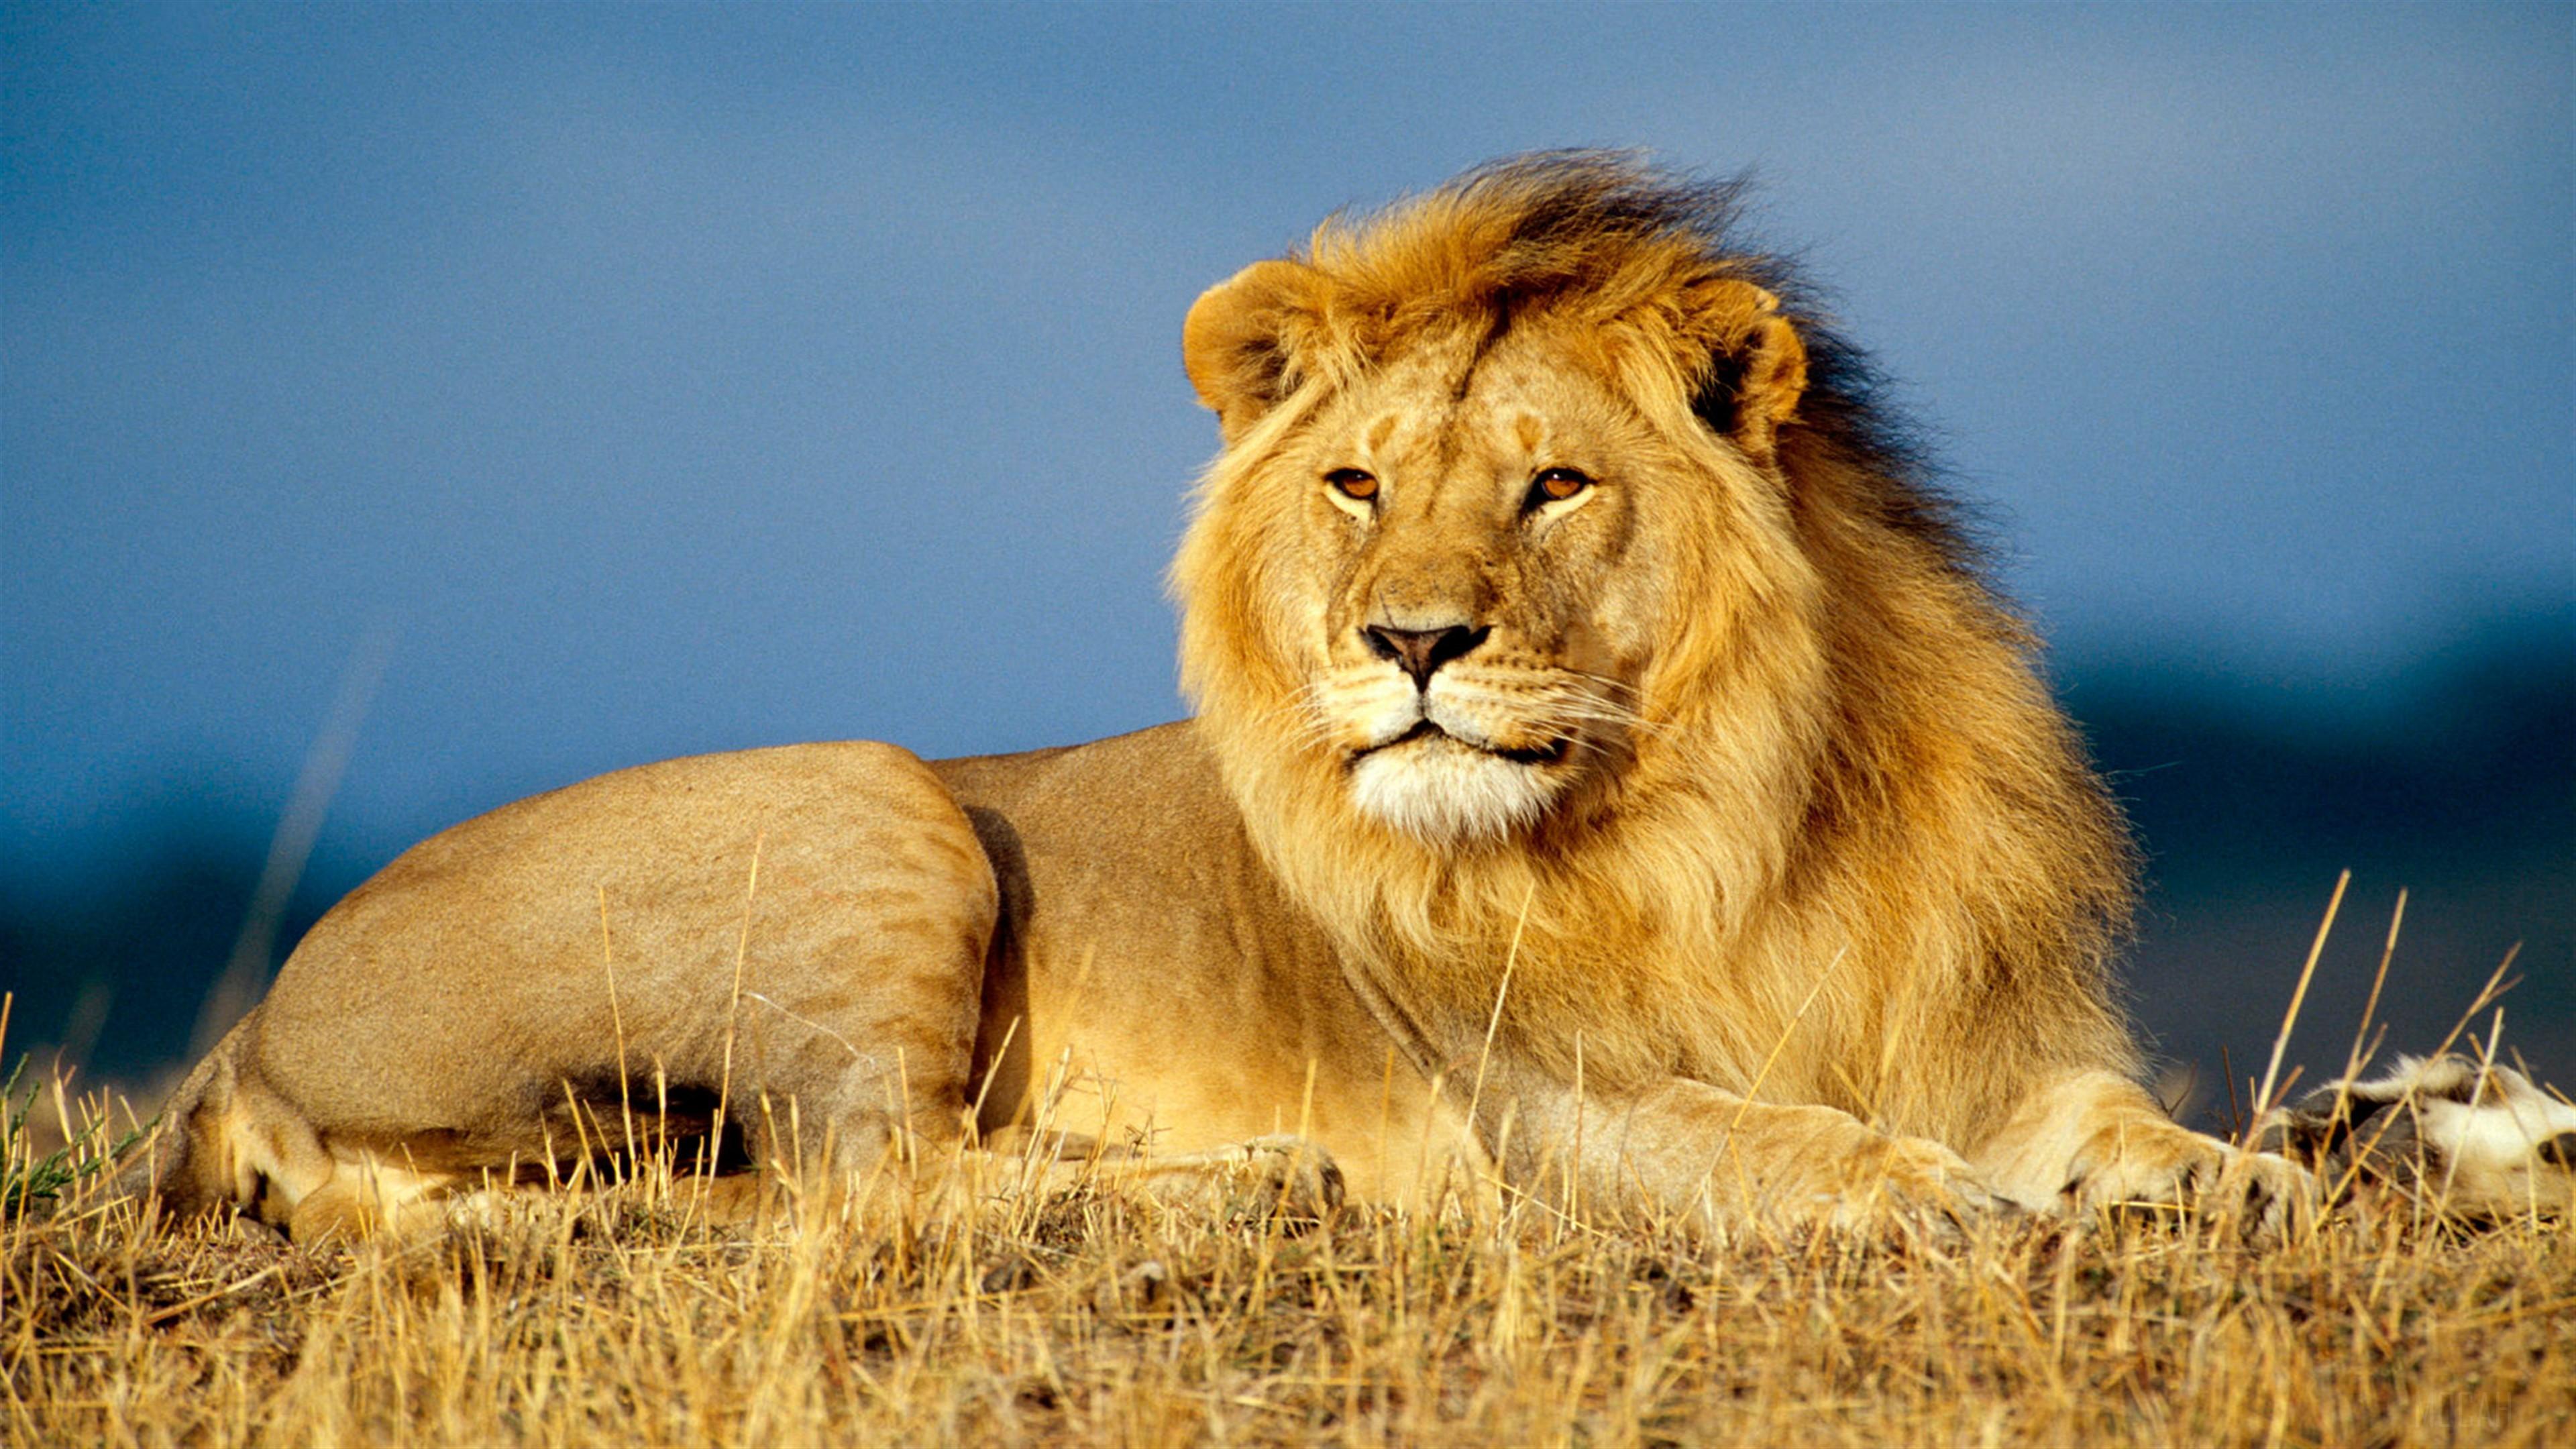 HD wallpaper, African Lion King 4K